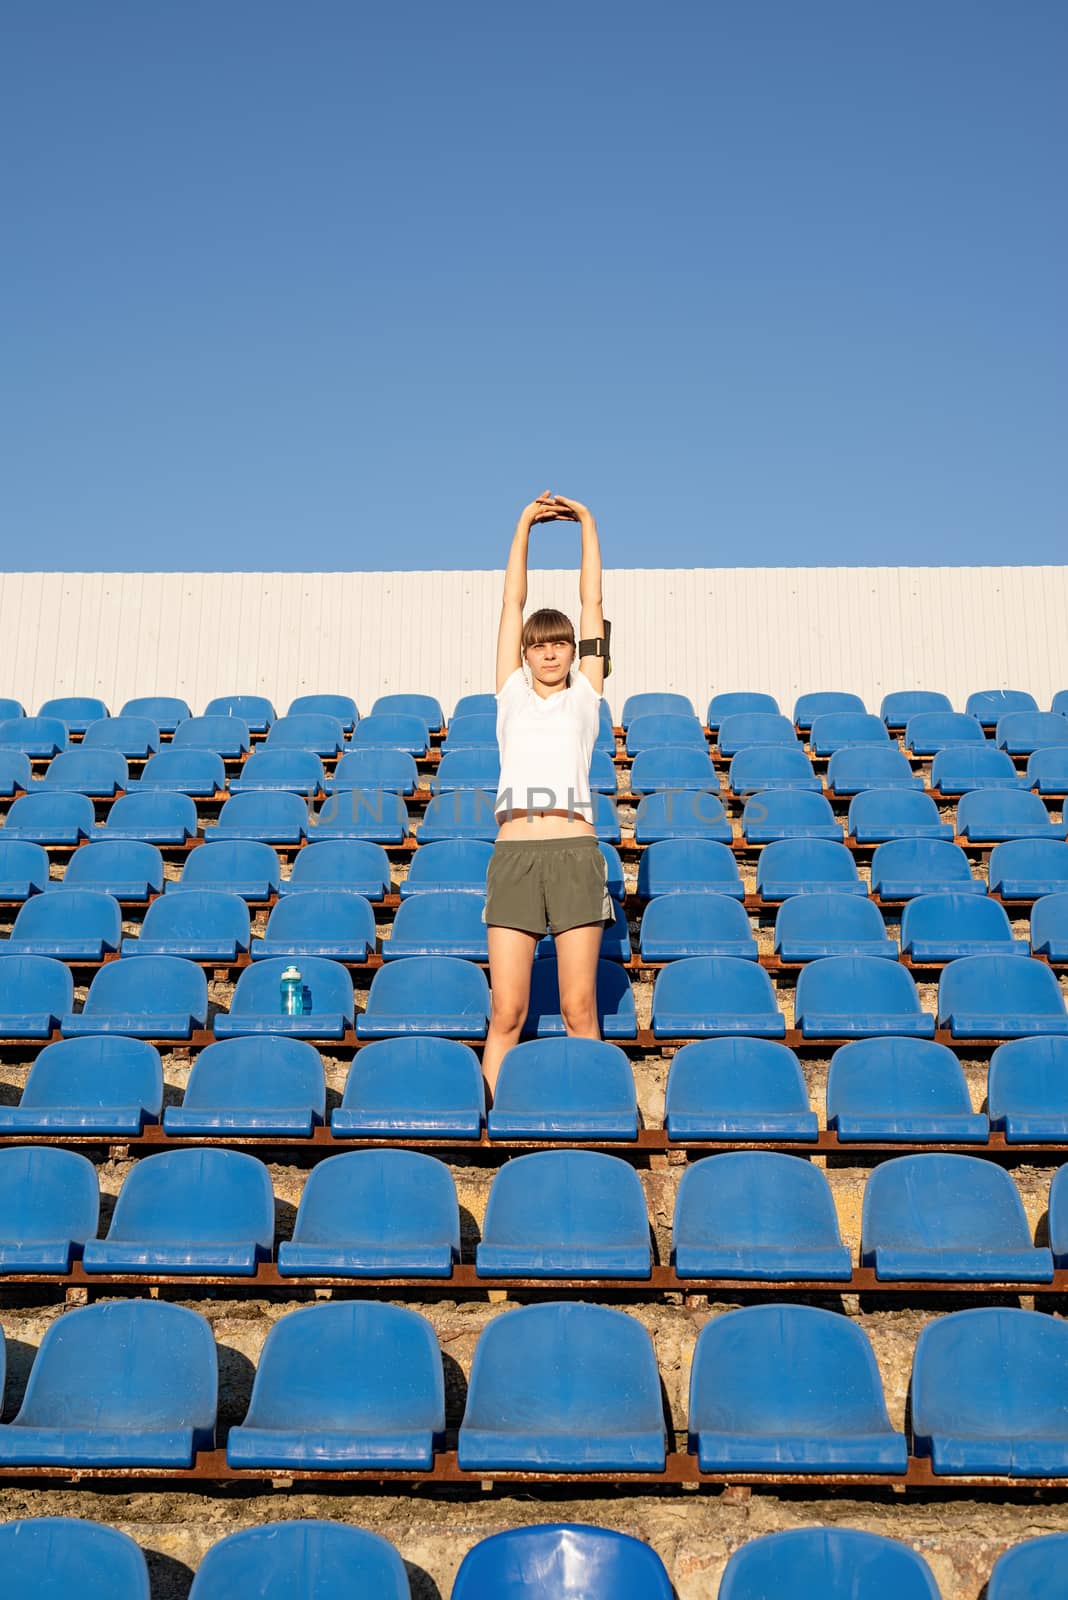 Teenage doing sports alone at the empty stadium by Desperada